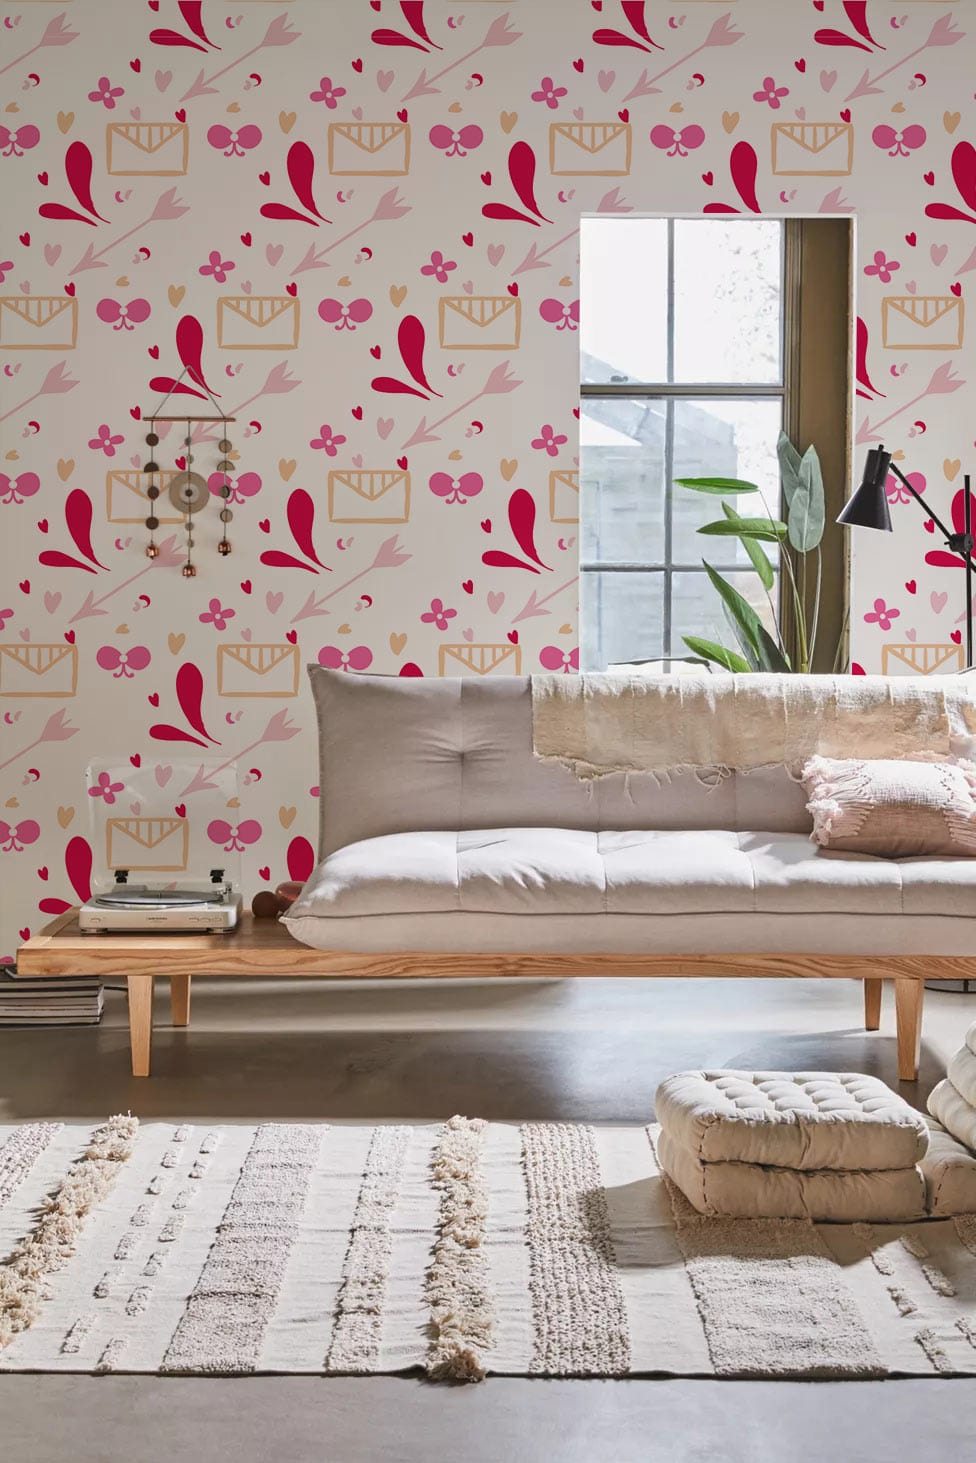 Love in Envelope repeated Pattern Wallpaper Mural for living Room decor